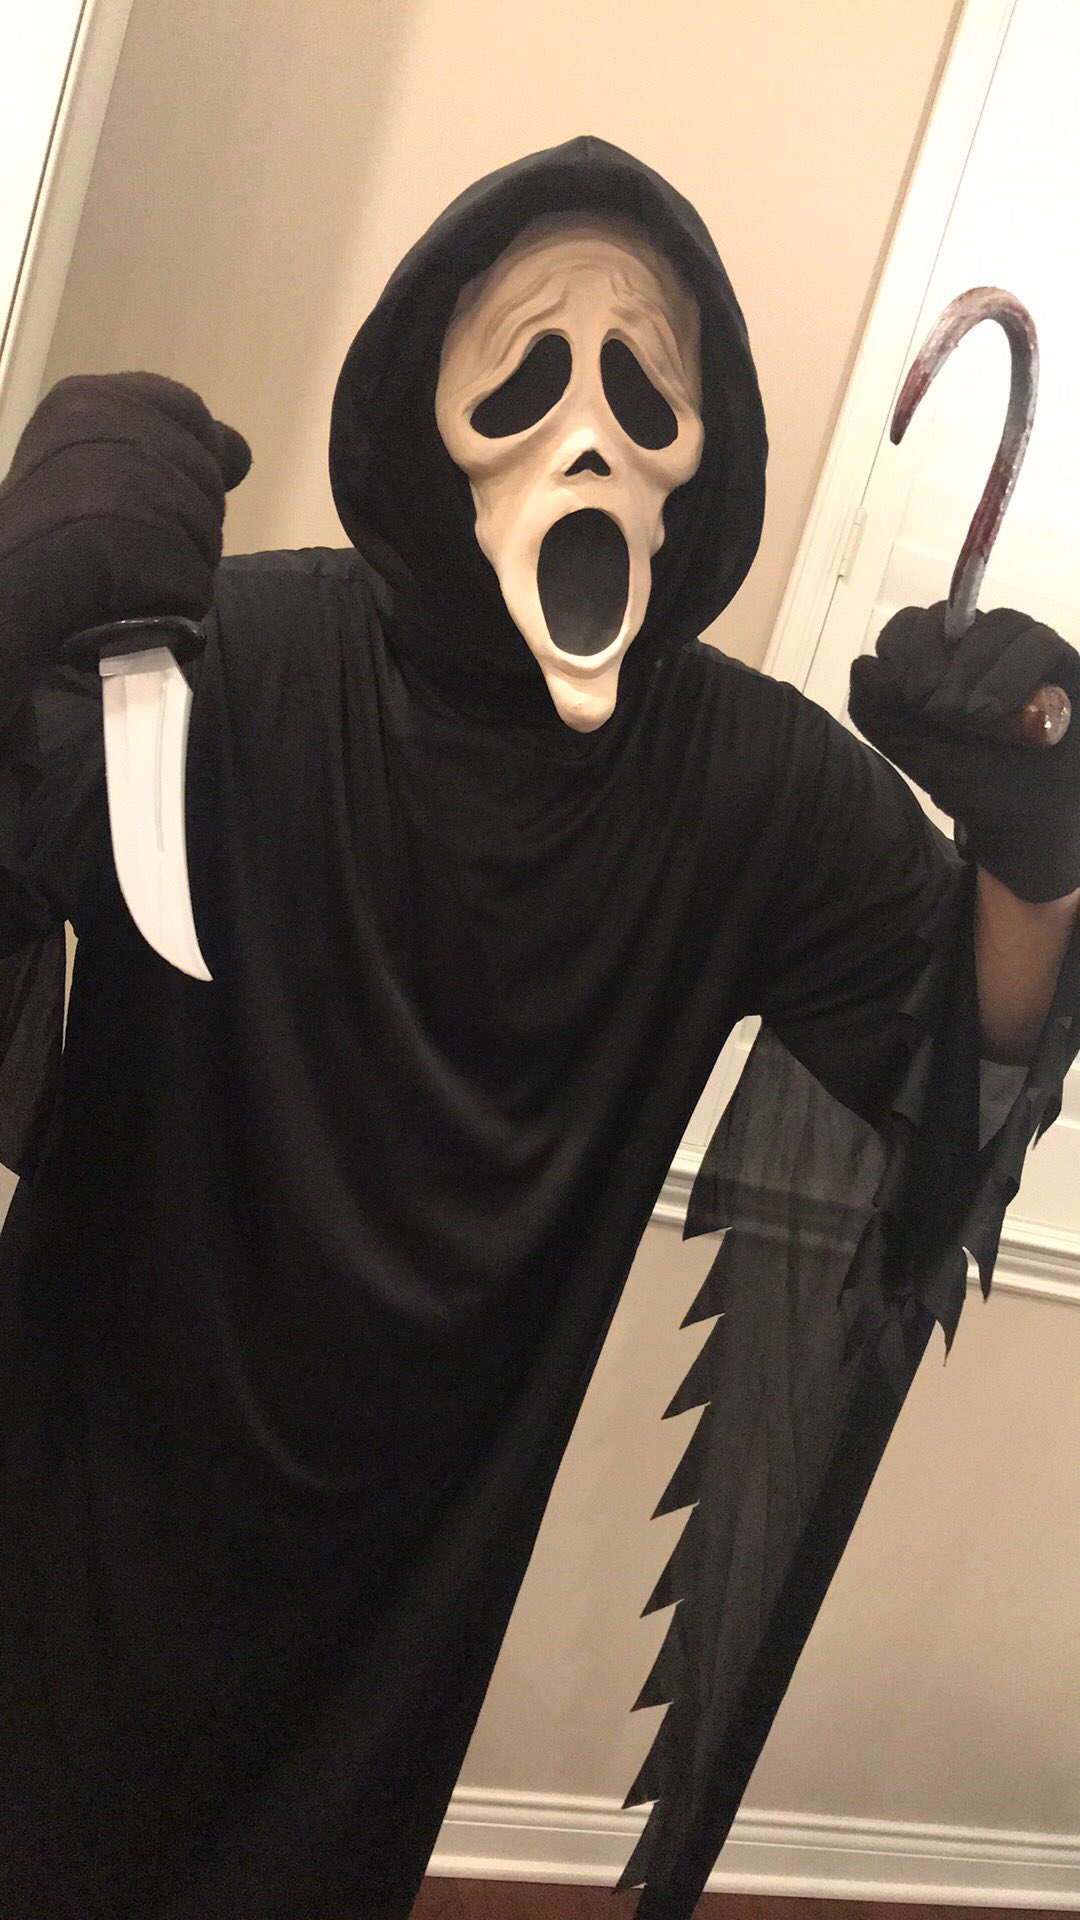 omvatten Vesting kaping Gianni Belotti (Speems) on Twitter: "My Halloween costume this year. # scarymovie #ghostface #wassup #spoof #costume (mask made by Rony Massart)  https://t.co/BvVllrt6Nh" / Twitter